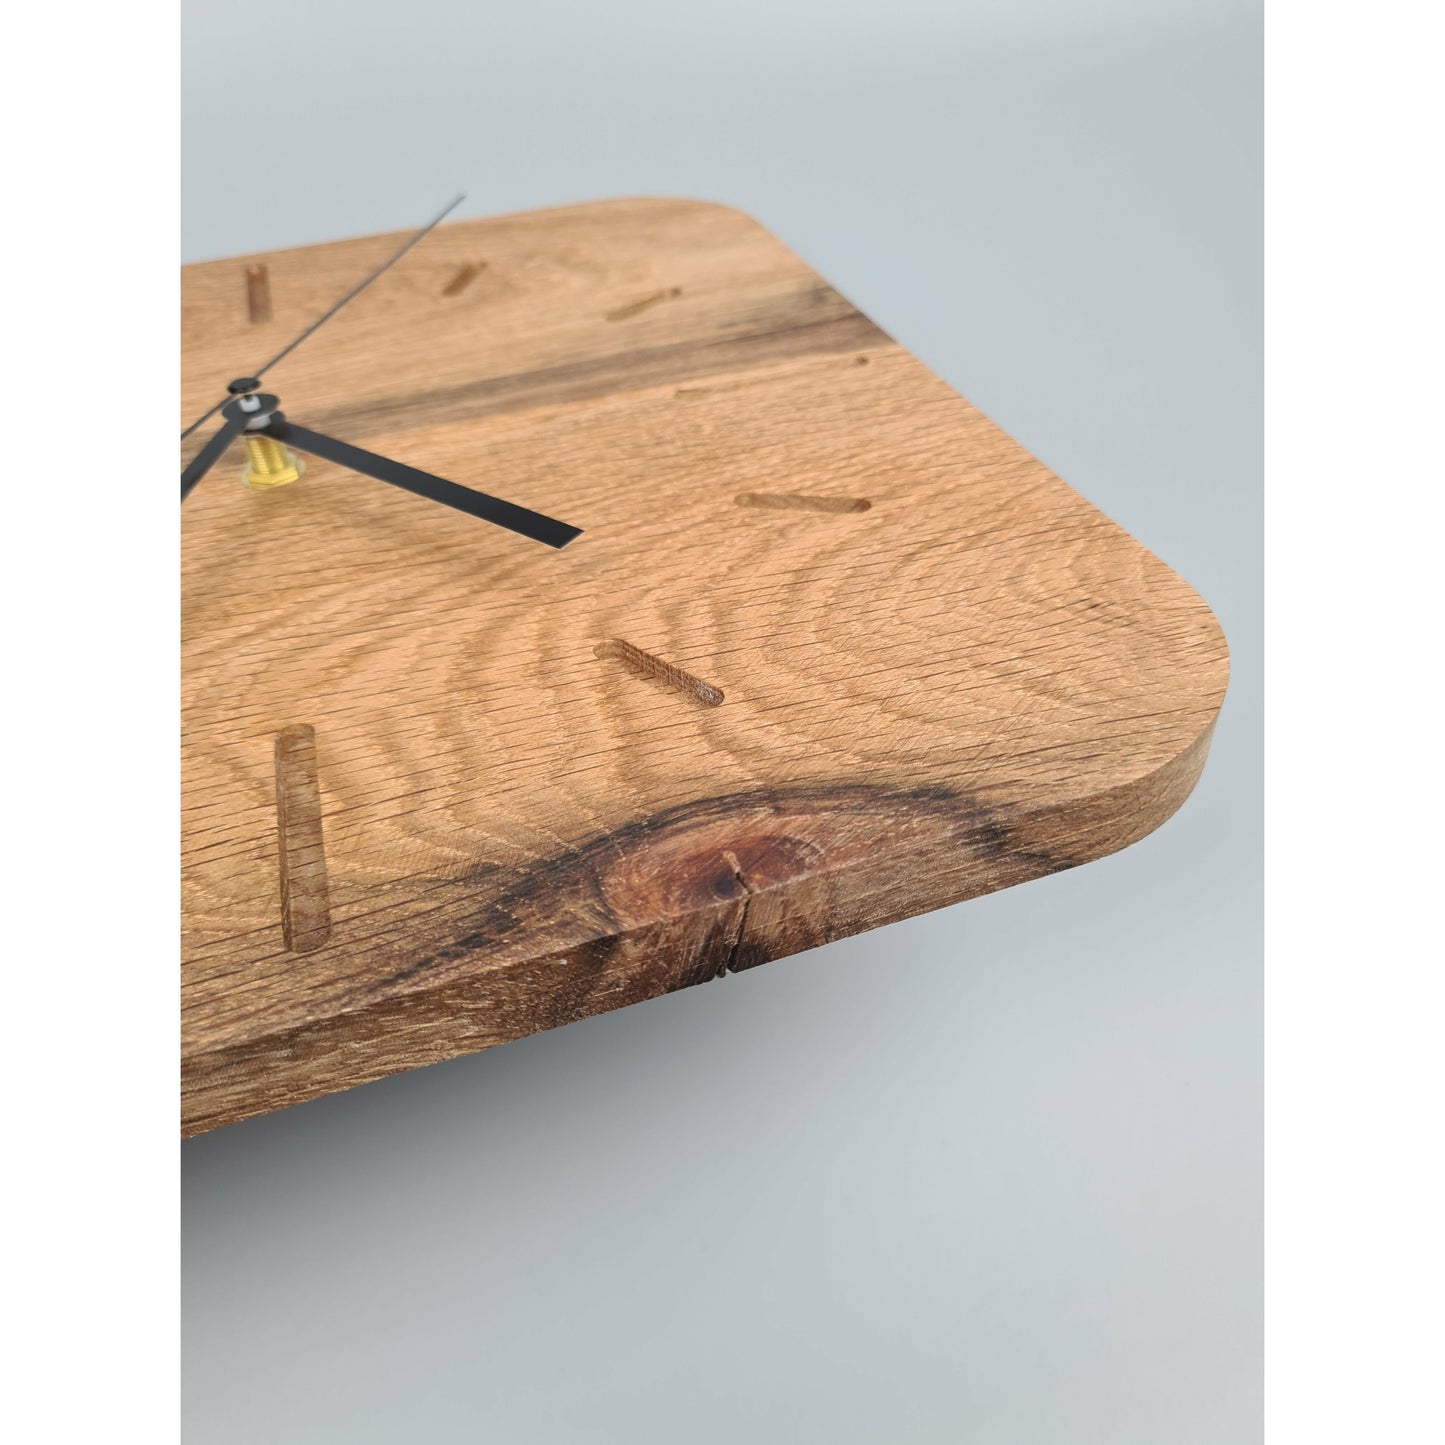 ClockDesignCo 100% Solid Oak Wooden Wall Clock | Large Square Kitchen Clock | Rustic Wall Clock